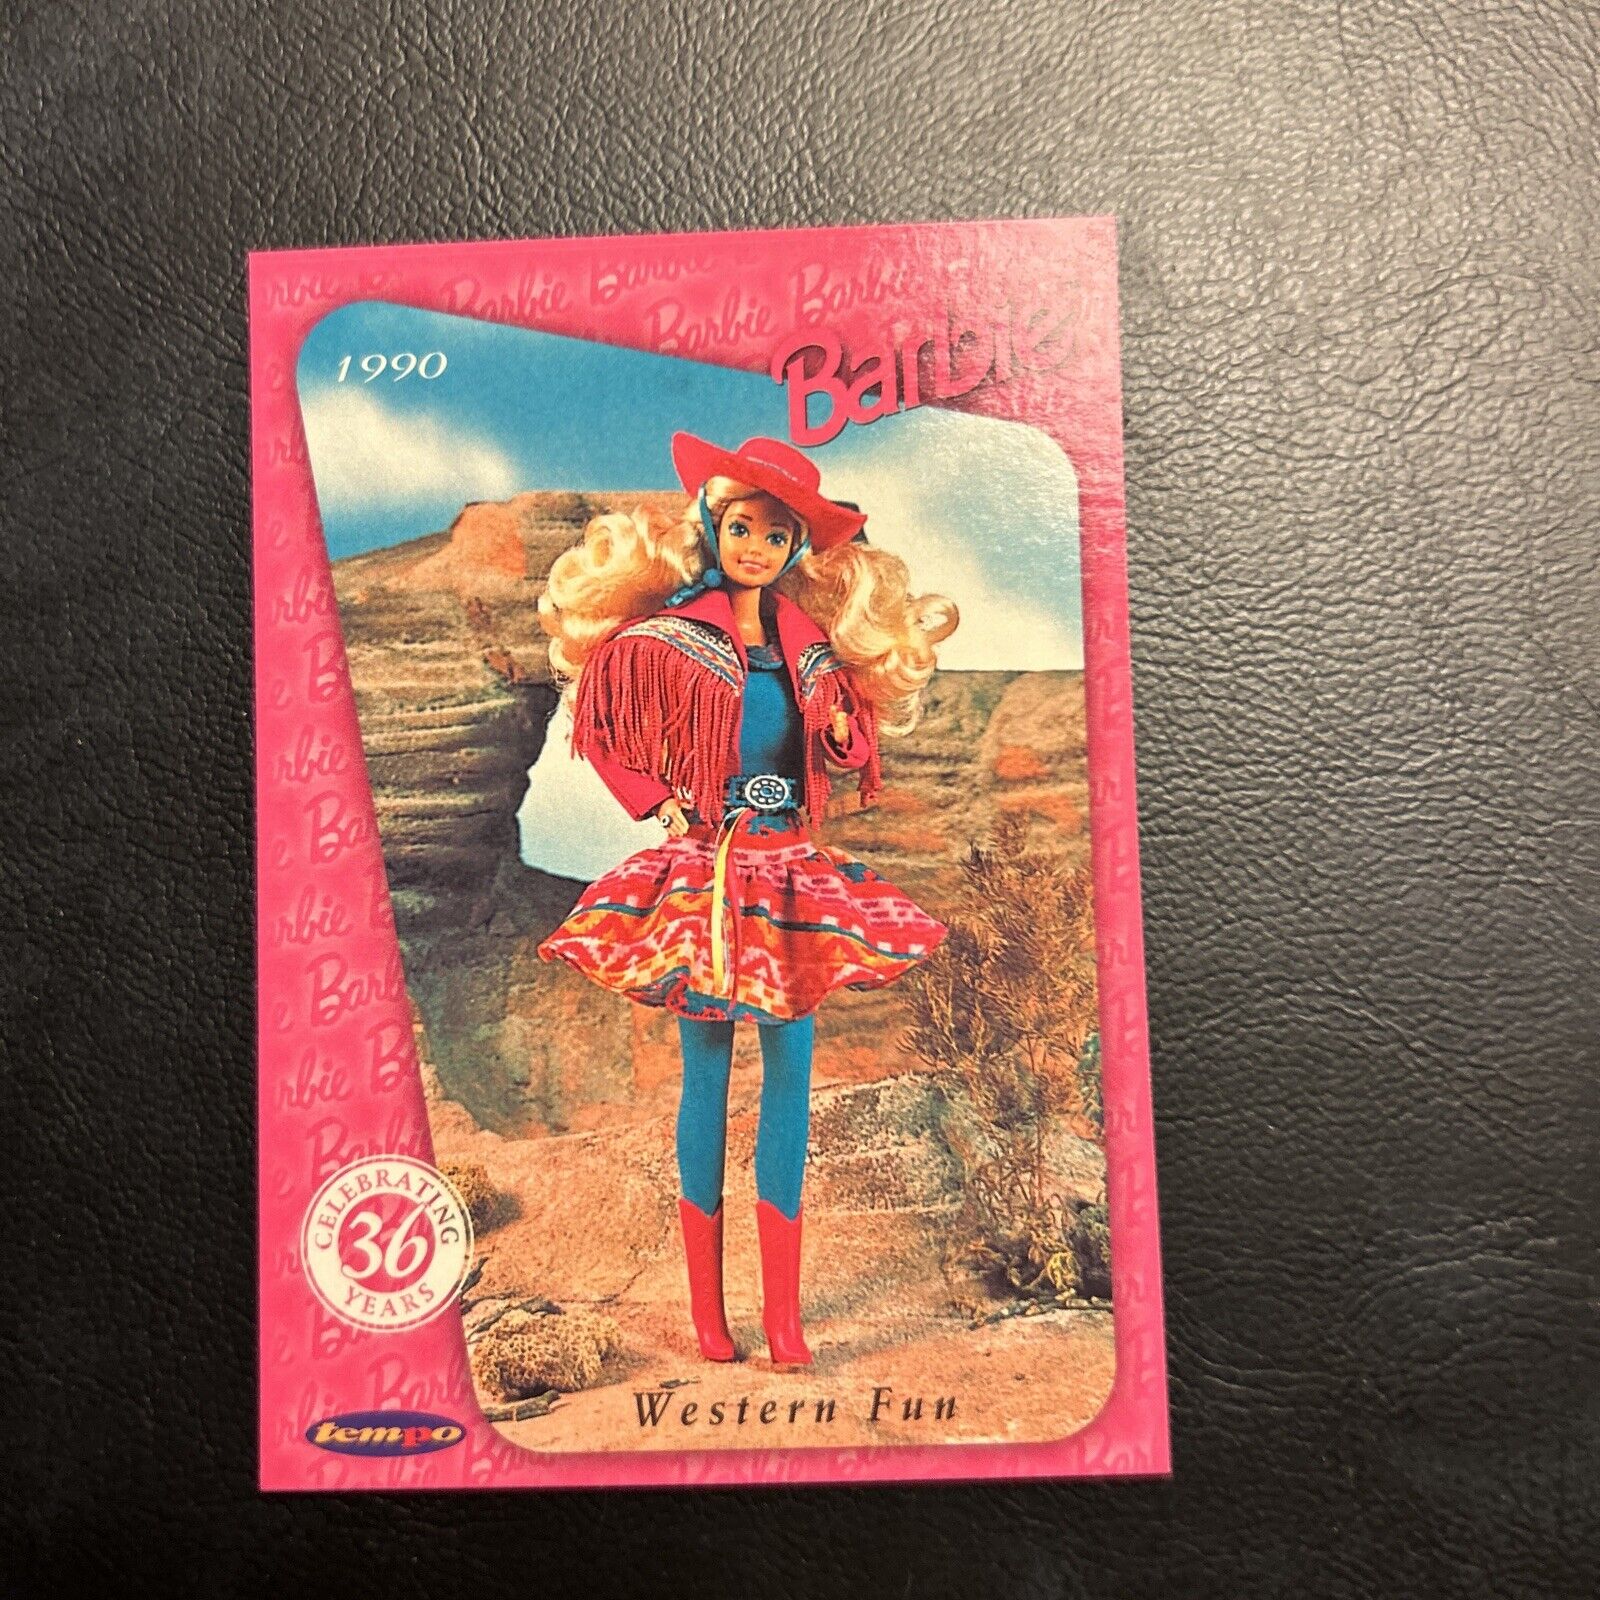 Jb9c Barbie Doll Celebrating 36 Years #62 Western Fun, 1990